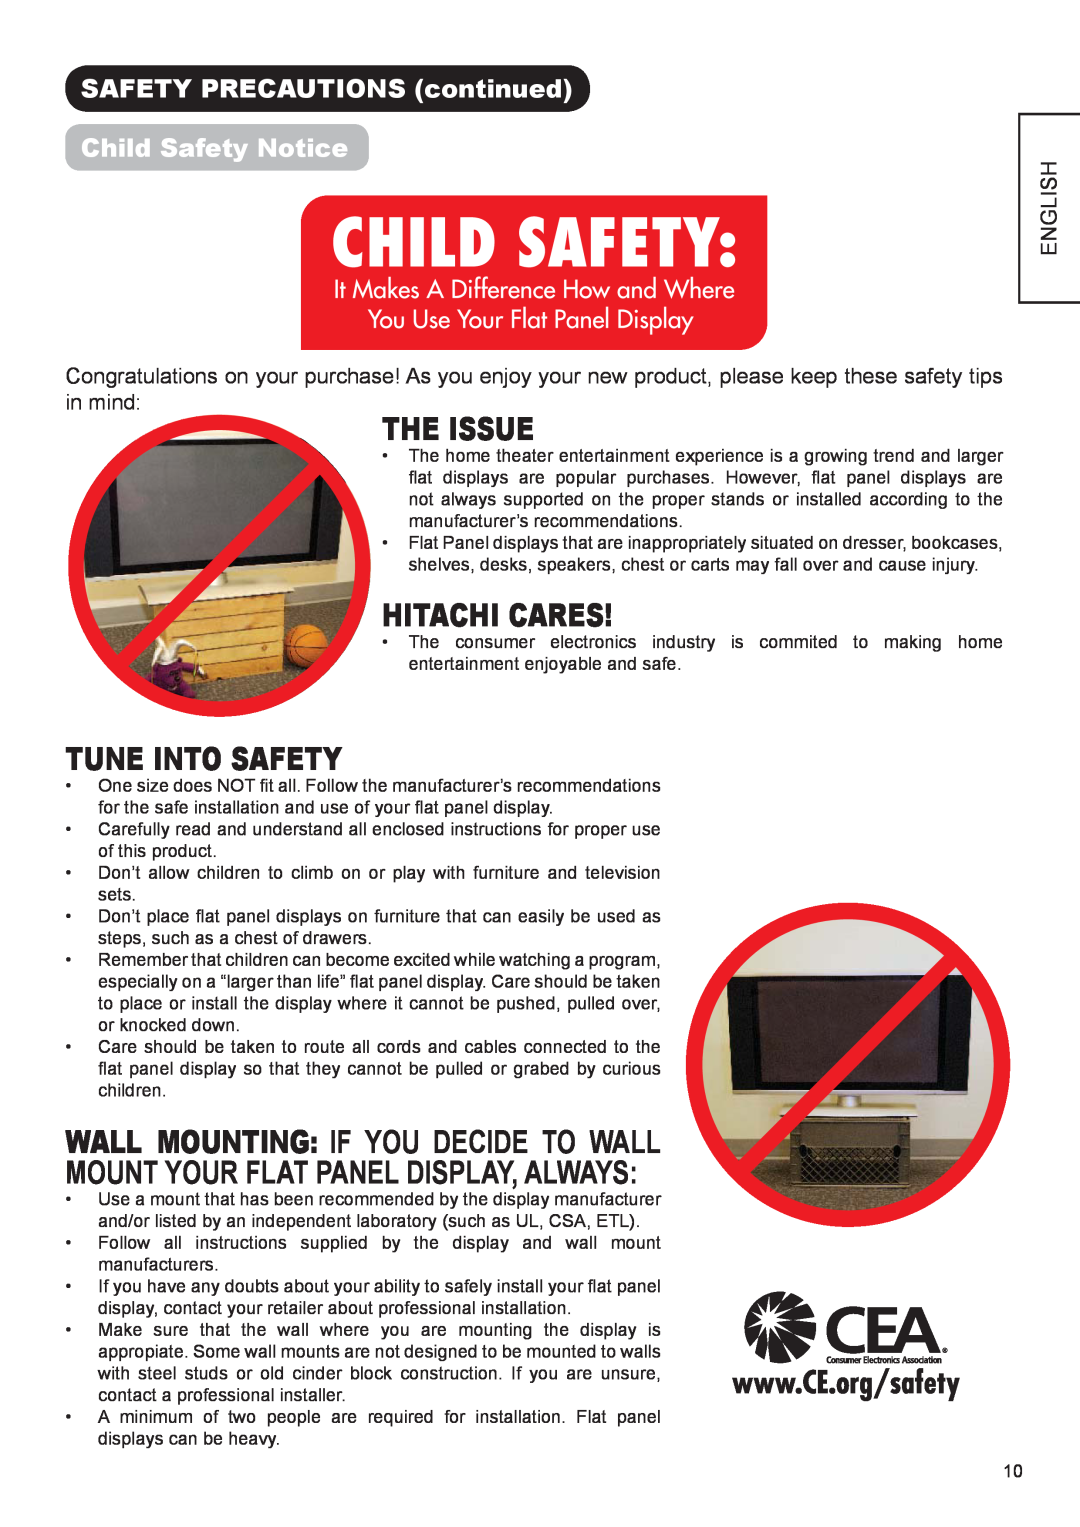 Hitachi UT42X902, UT47X902 manual SAFETY PRECAUTIONS continued Child Safety Notice, Hitachi Cares, Tune Into Safety, English 